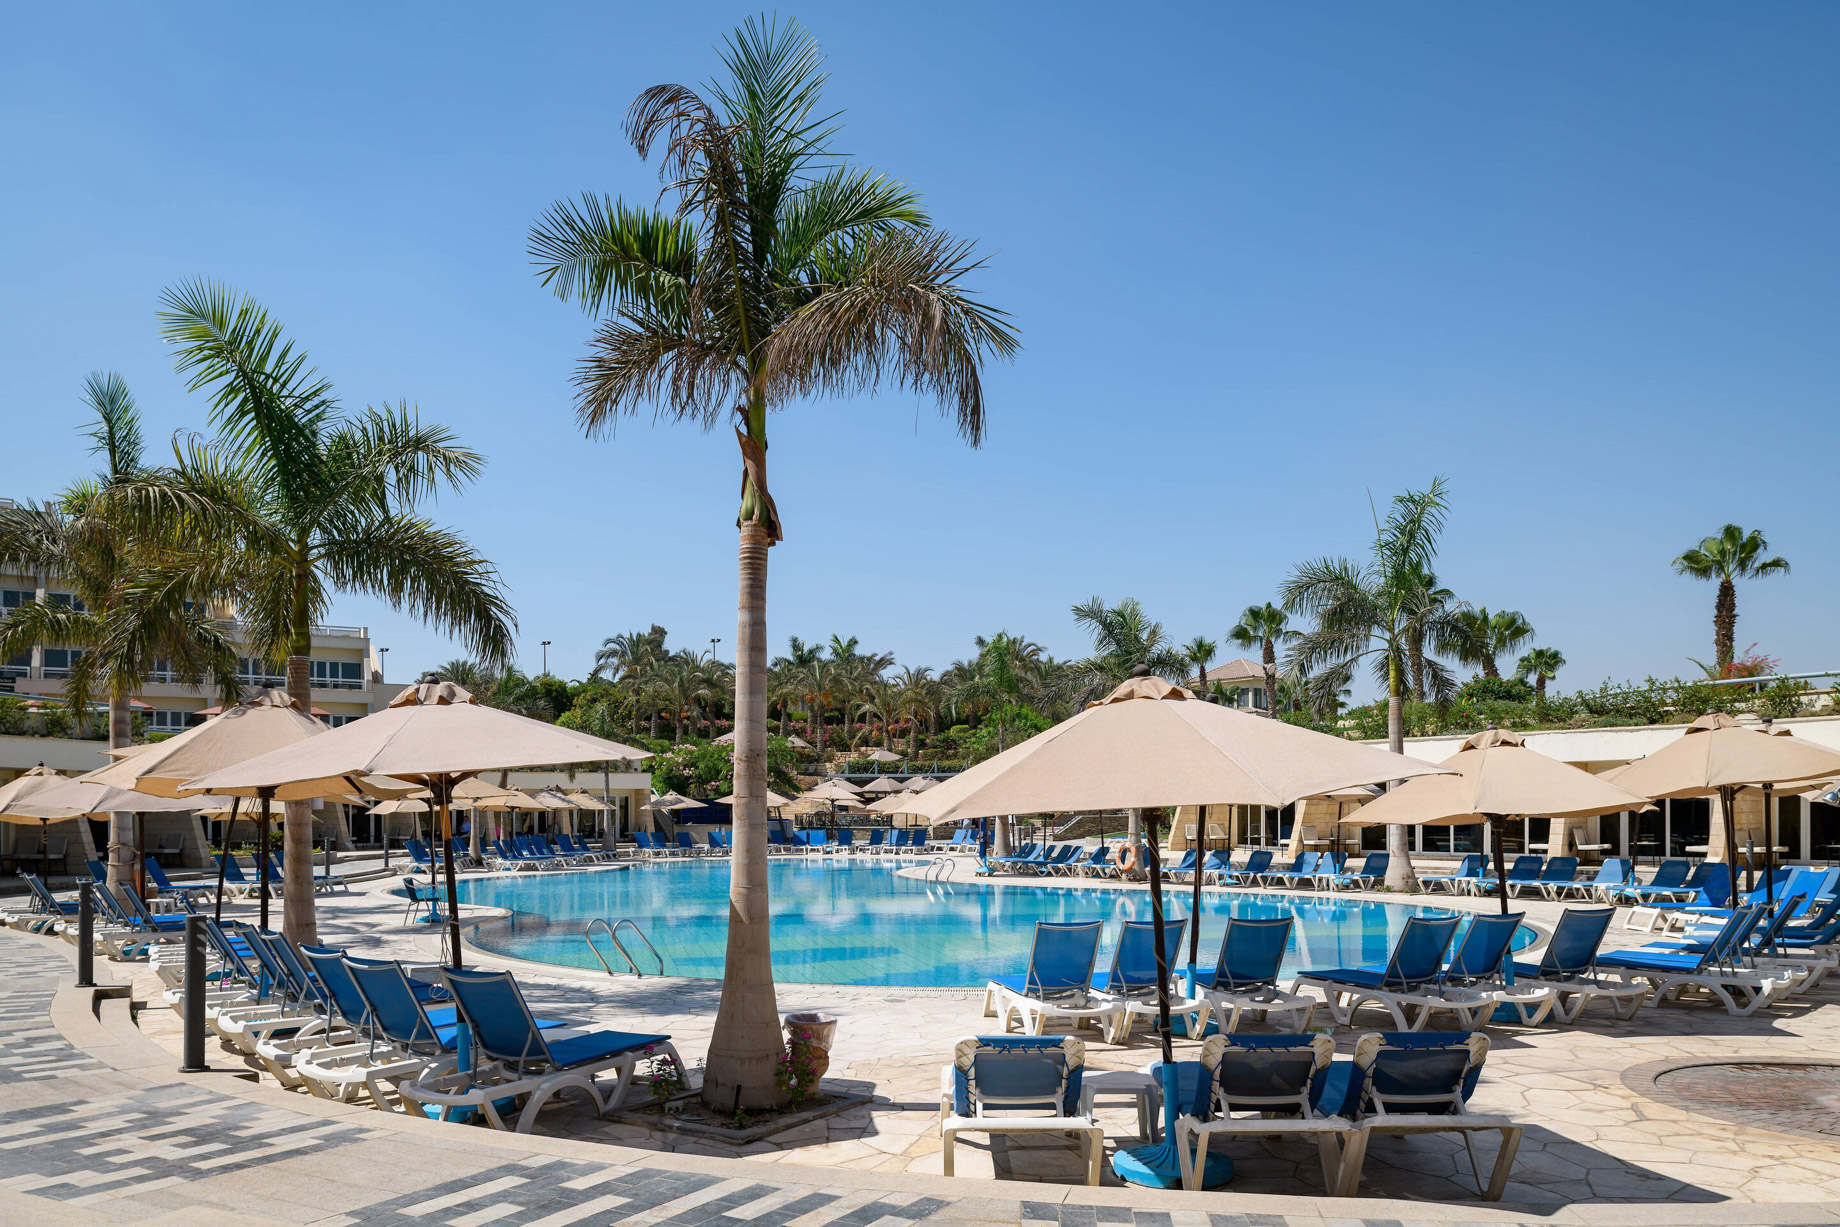 JW Marriott Hotel Cairo – Cairo, Egypt – PoolSide Cabana View